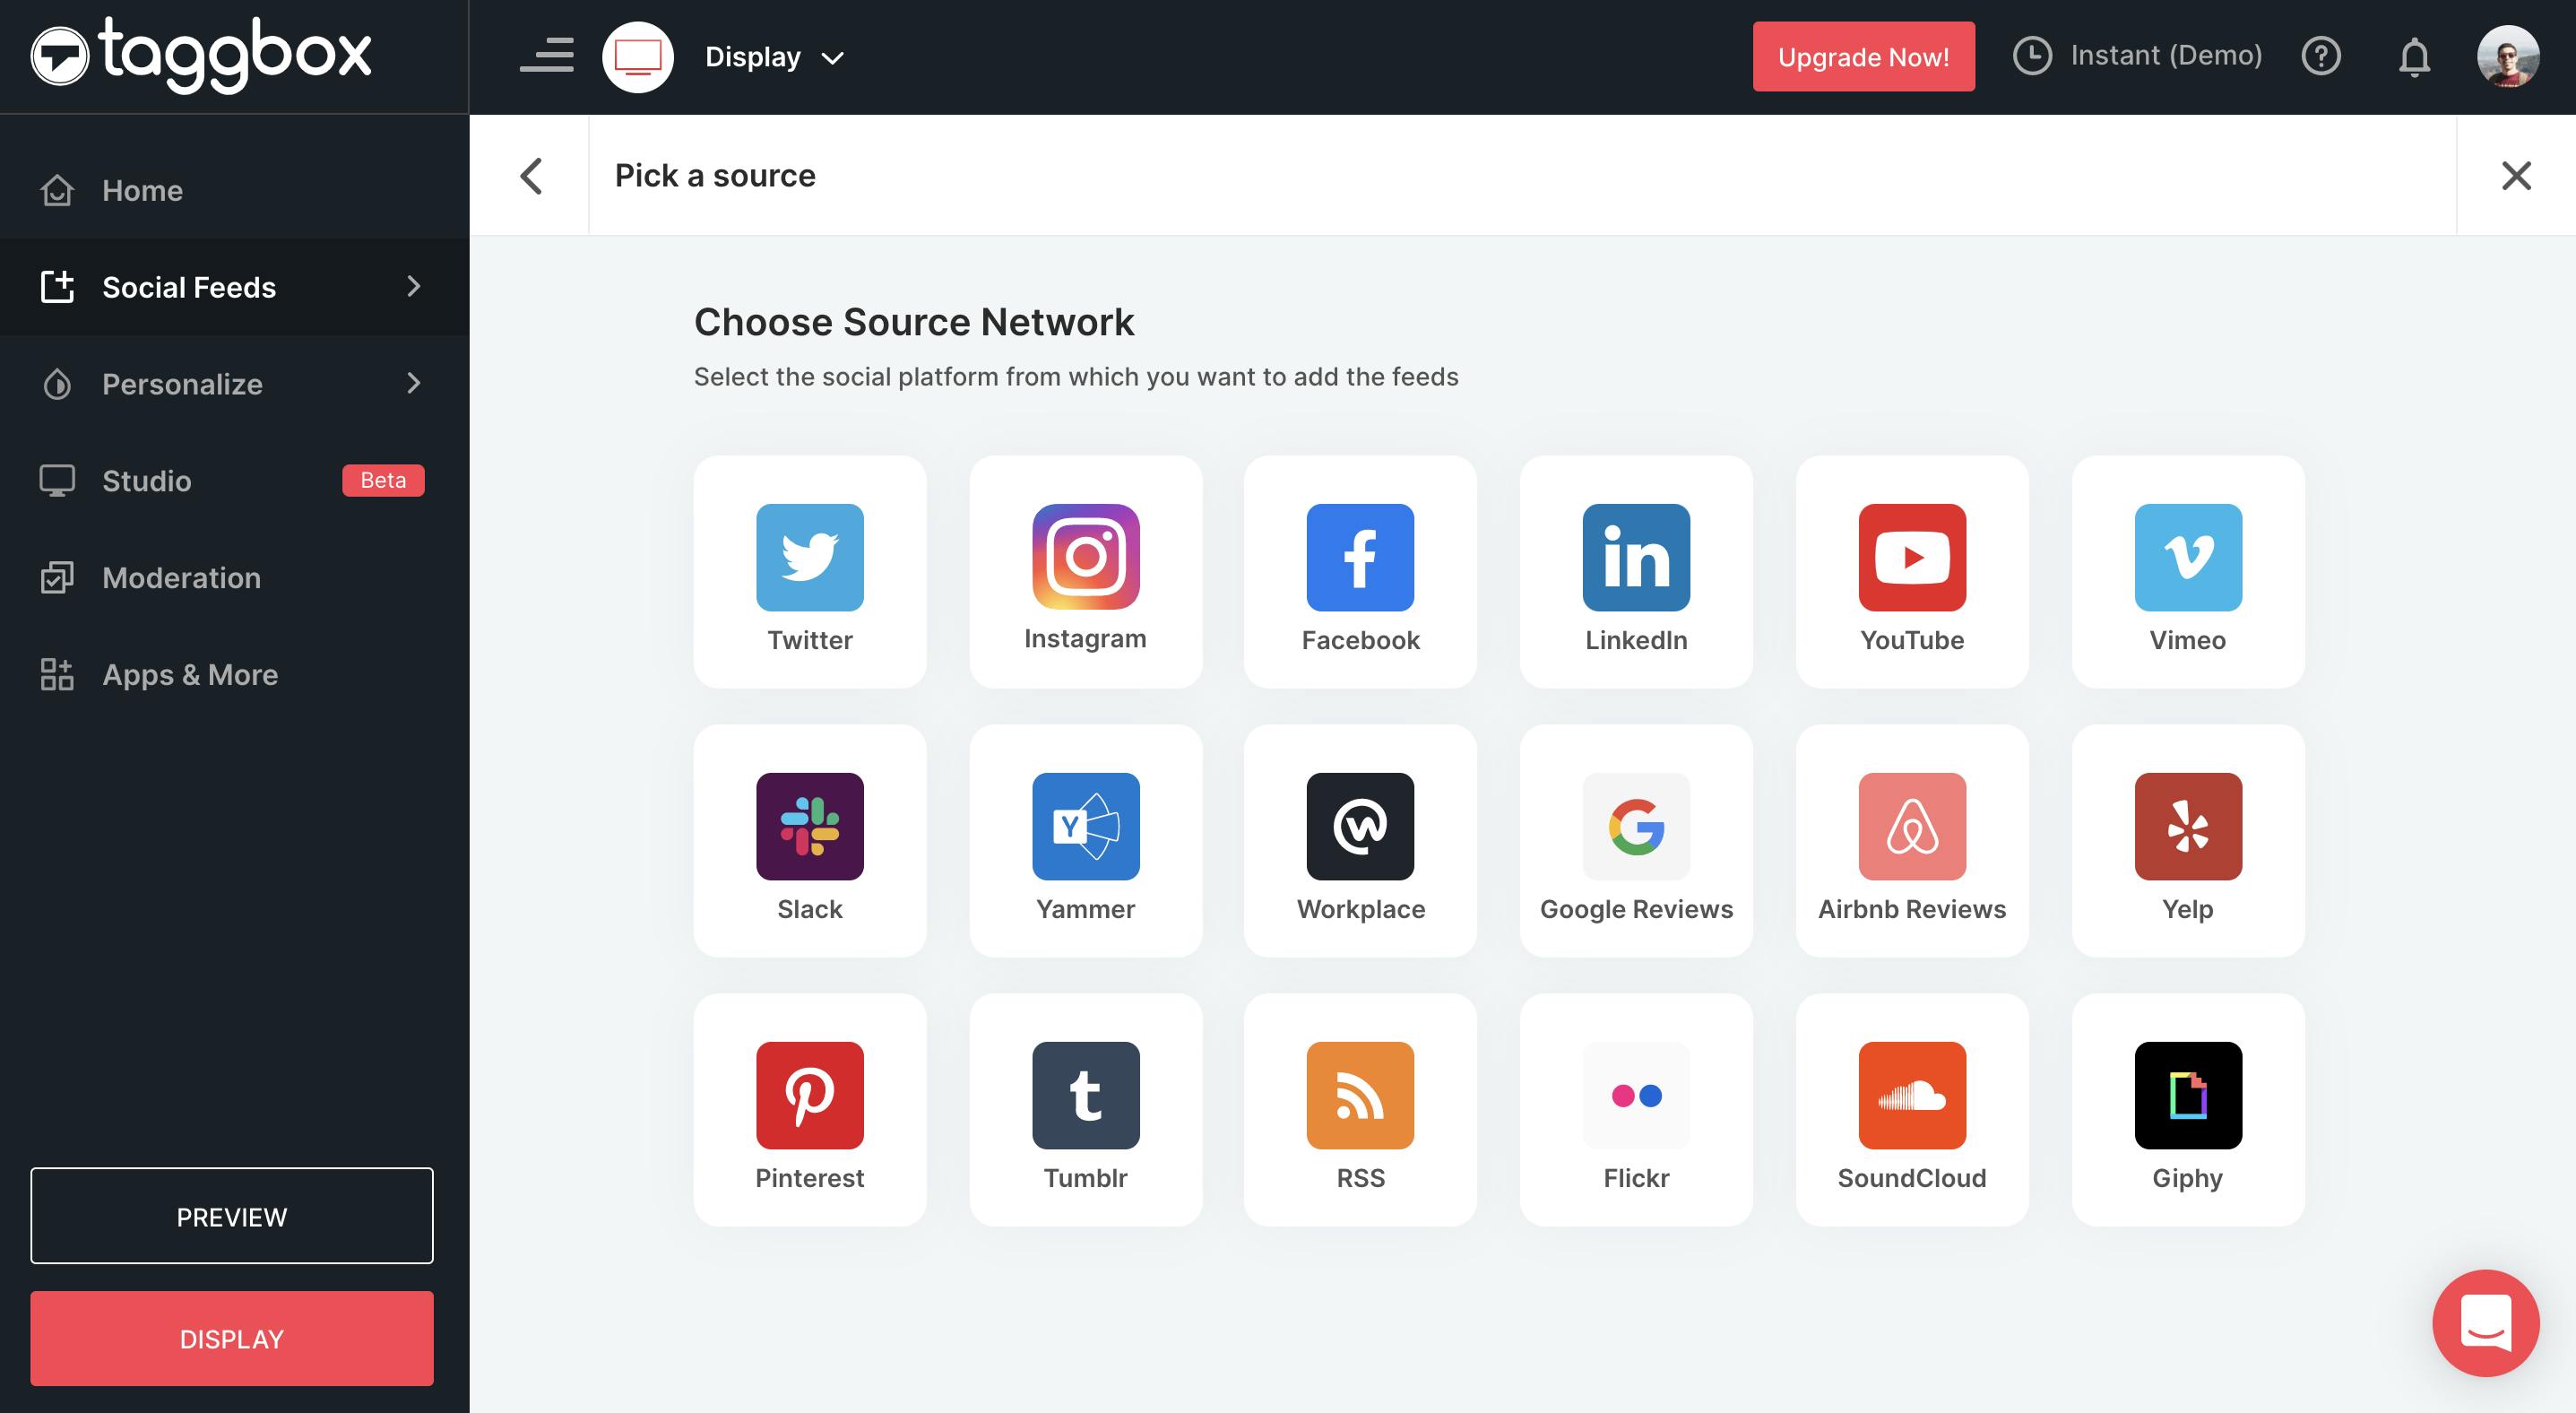 ScreenCloud Taggbox App Guide - Add social media 5.28.2021.png
